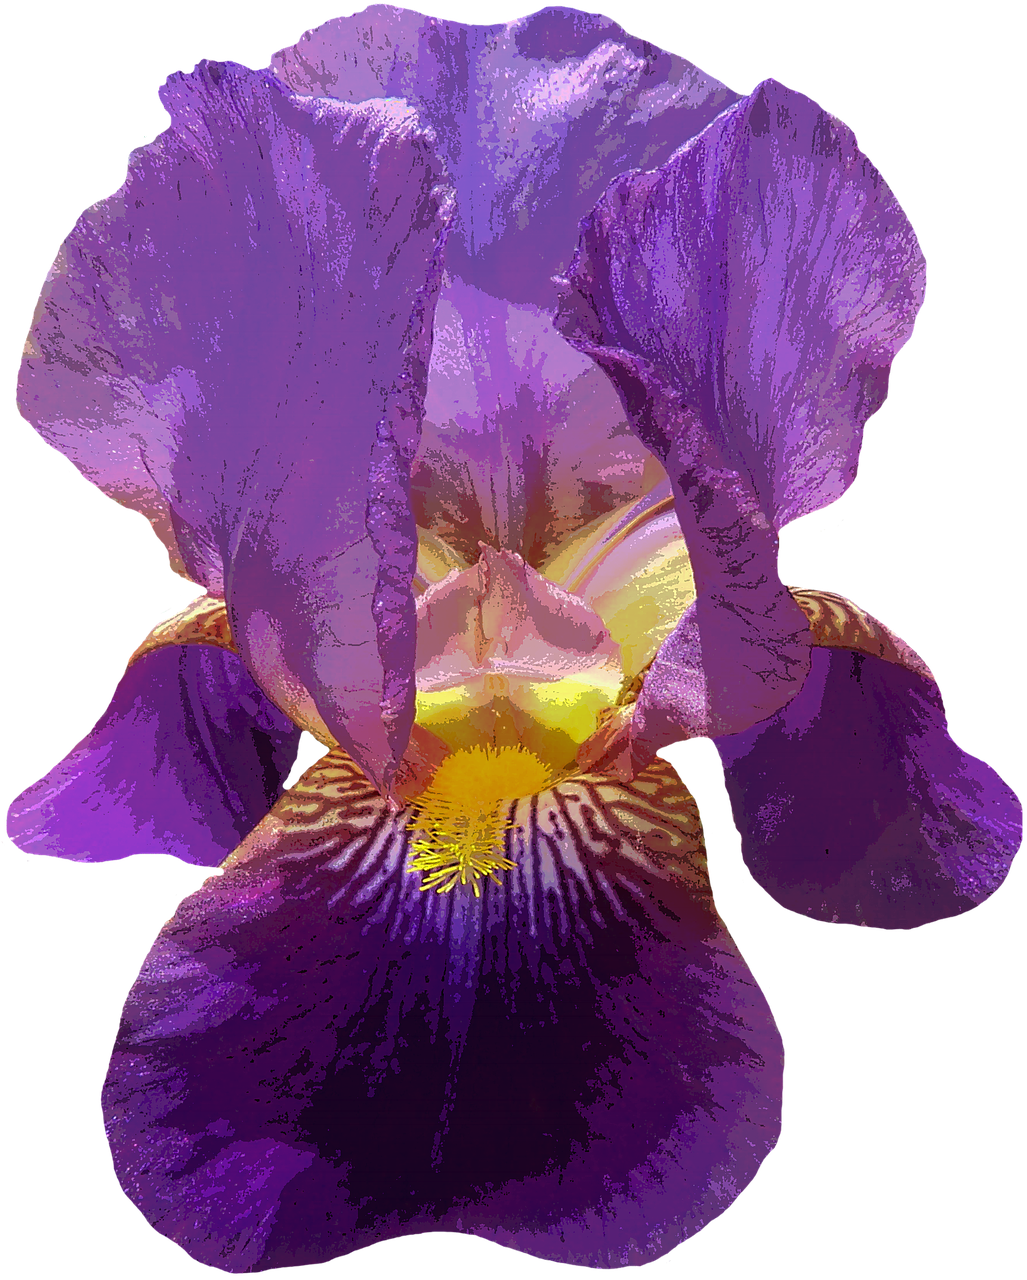 iris blossom bloom free photo